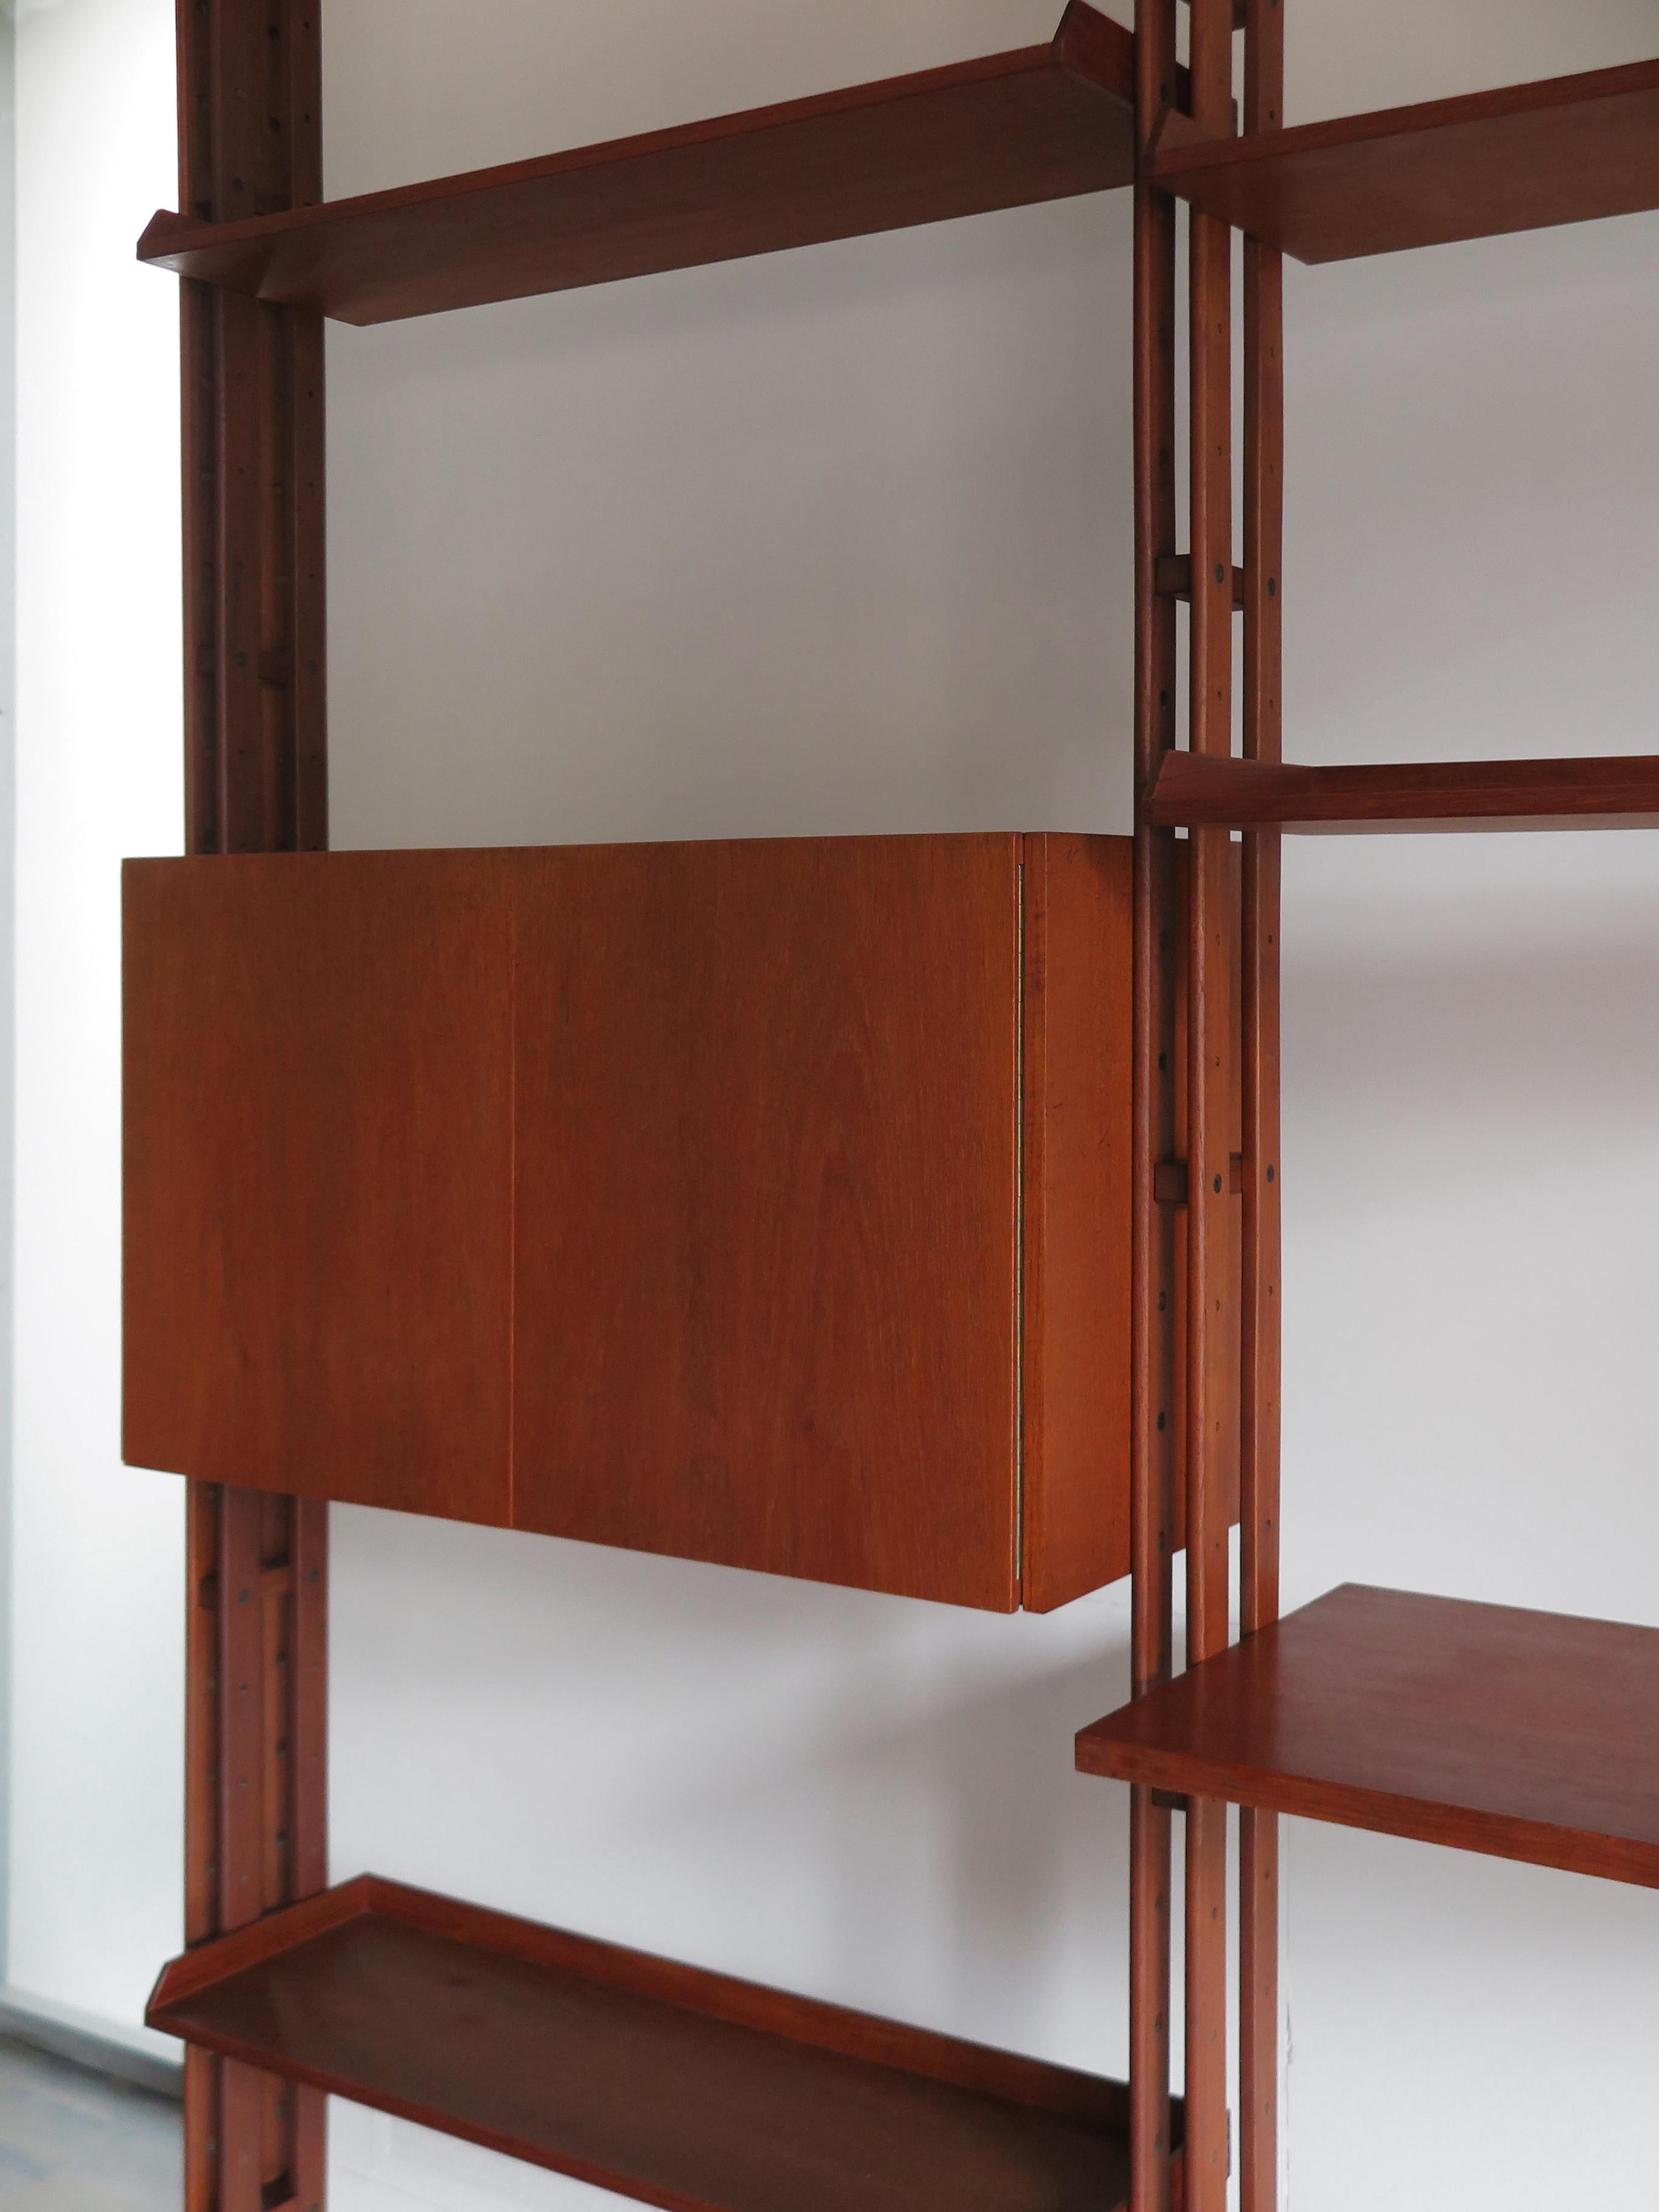 Mid-Century Modern Franco Albini Italian Midcentury Wood Bookcase LB7 for Poggi, 1950s